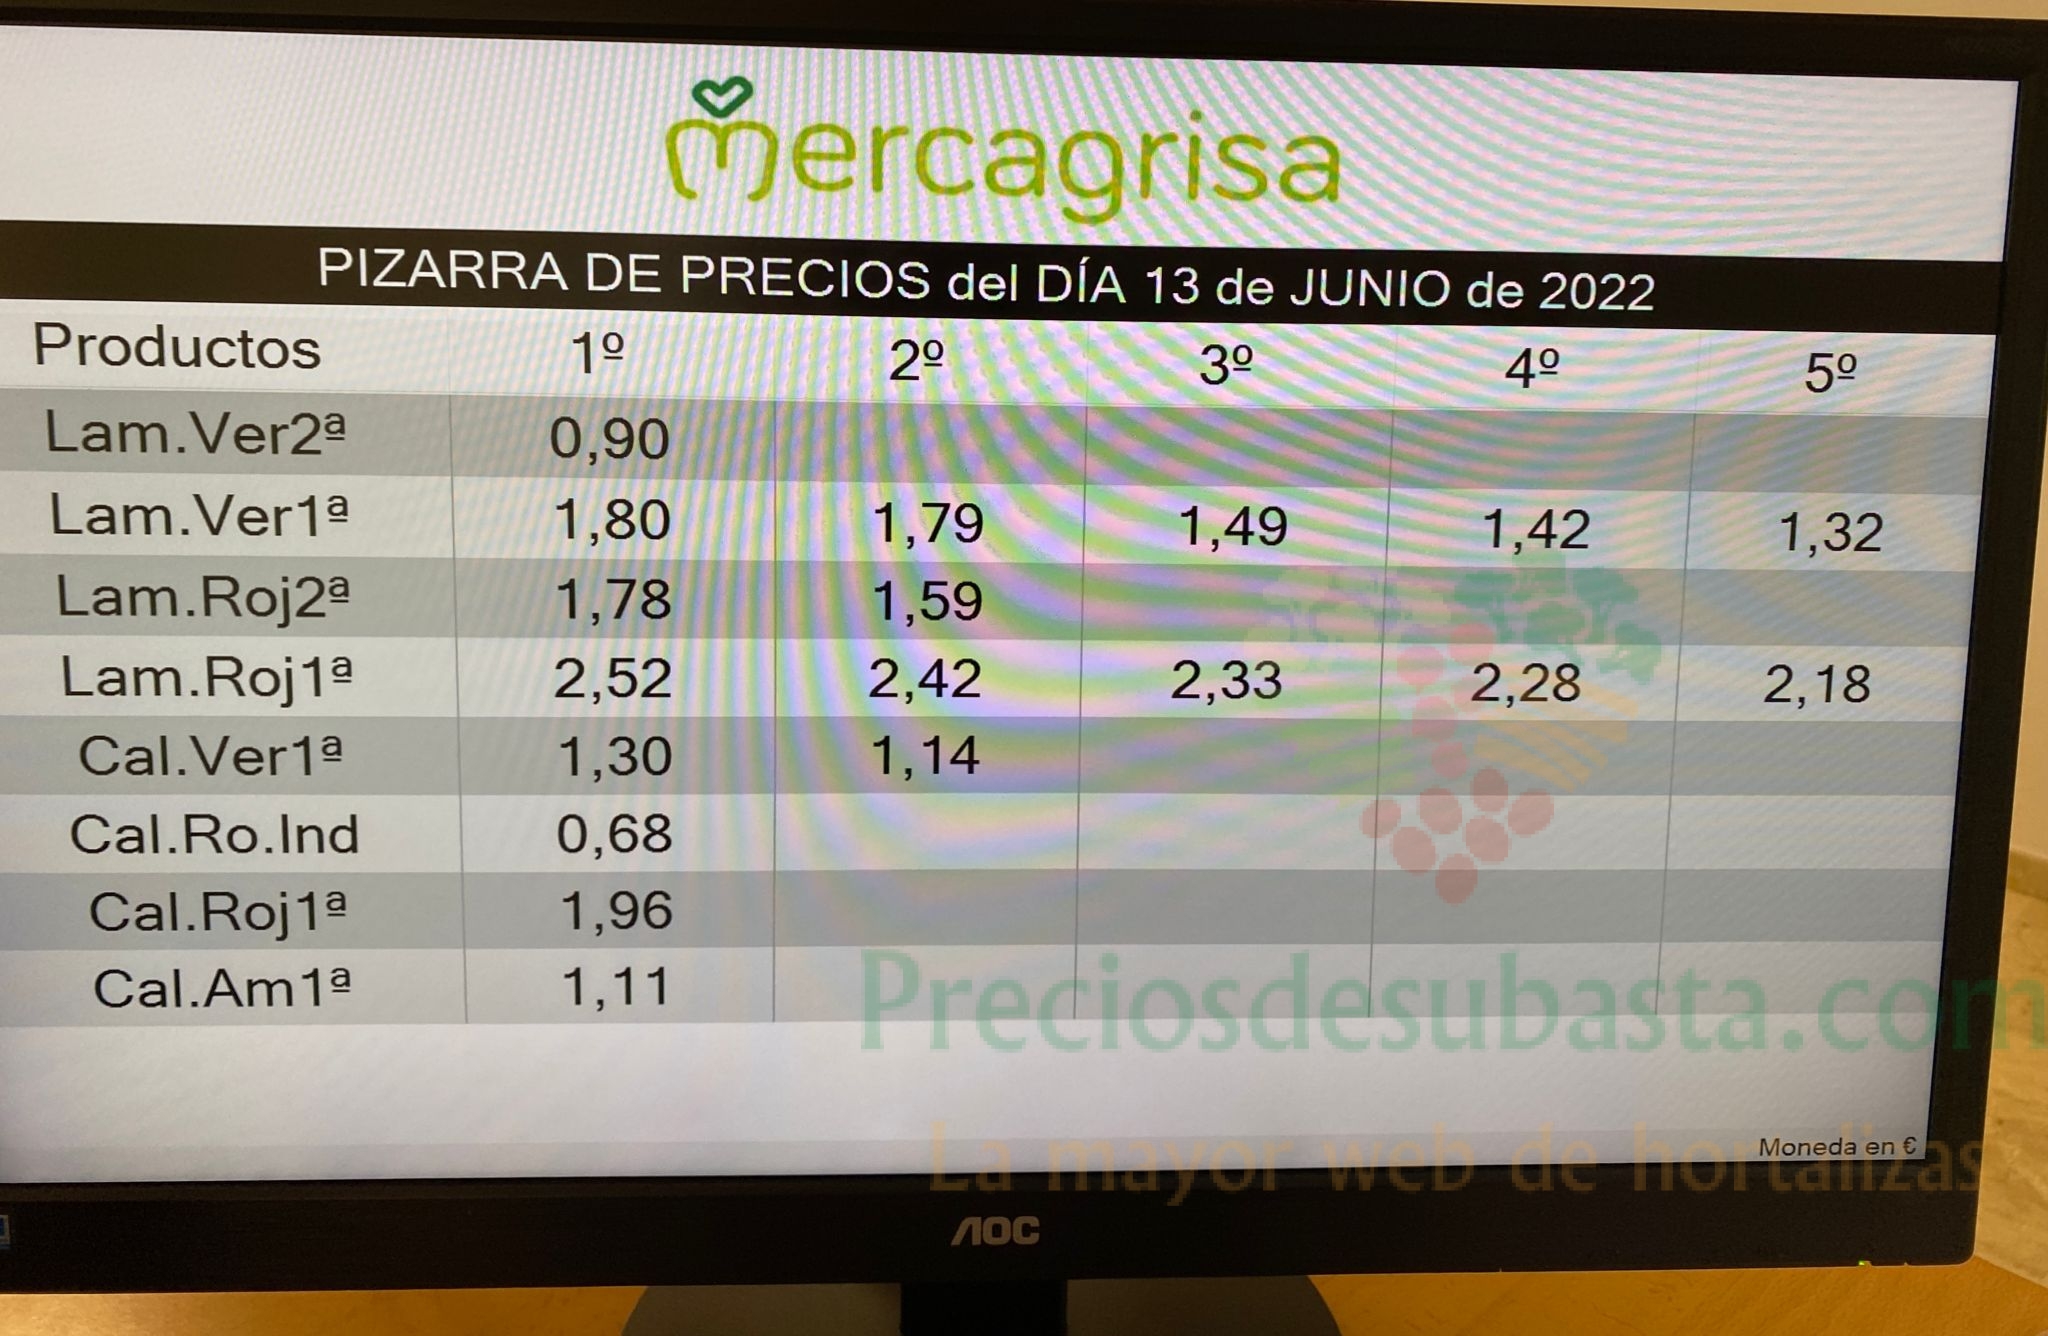 Subasta hortofrutícola Mercagrisa 13 de junio 2022